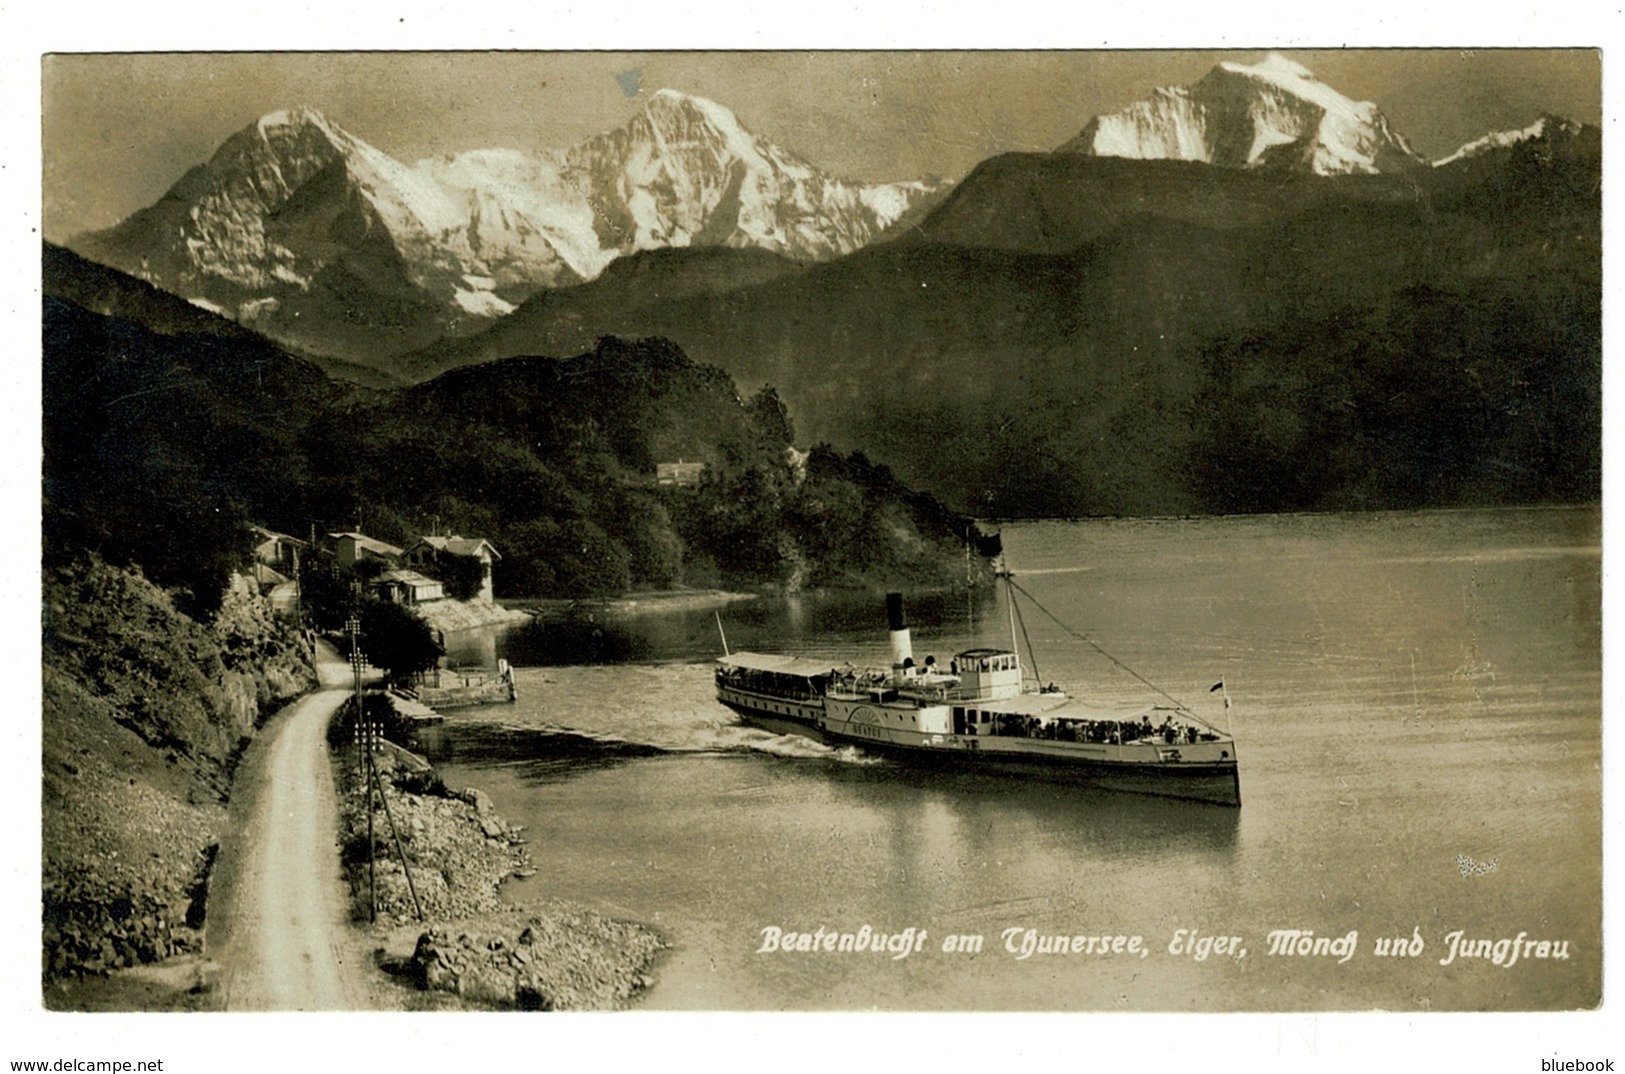 Ref 1390 - 1924 Real Photo Postcard - Paddlesteamer Beatenberg Am Thunersee Switzerland - Beatenberg